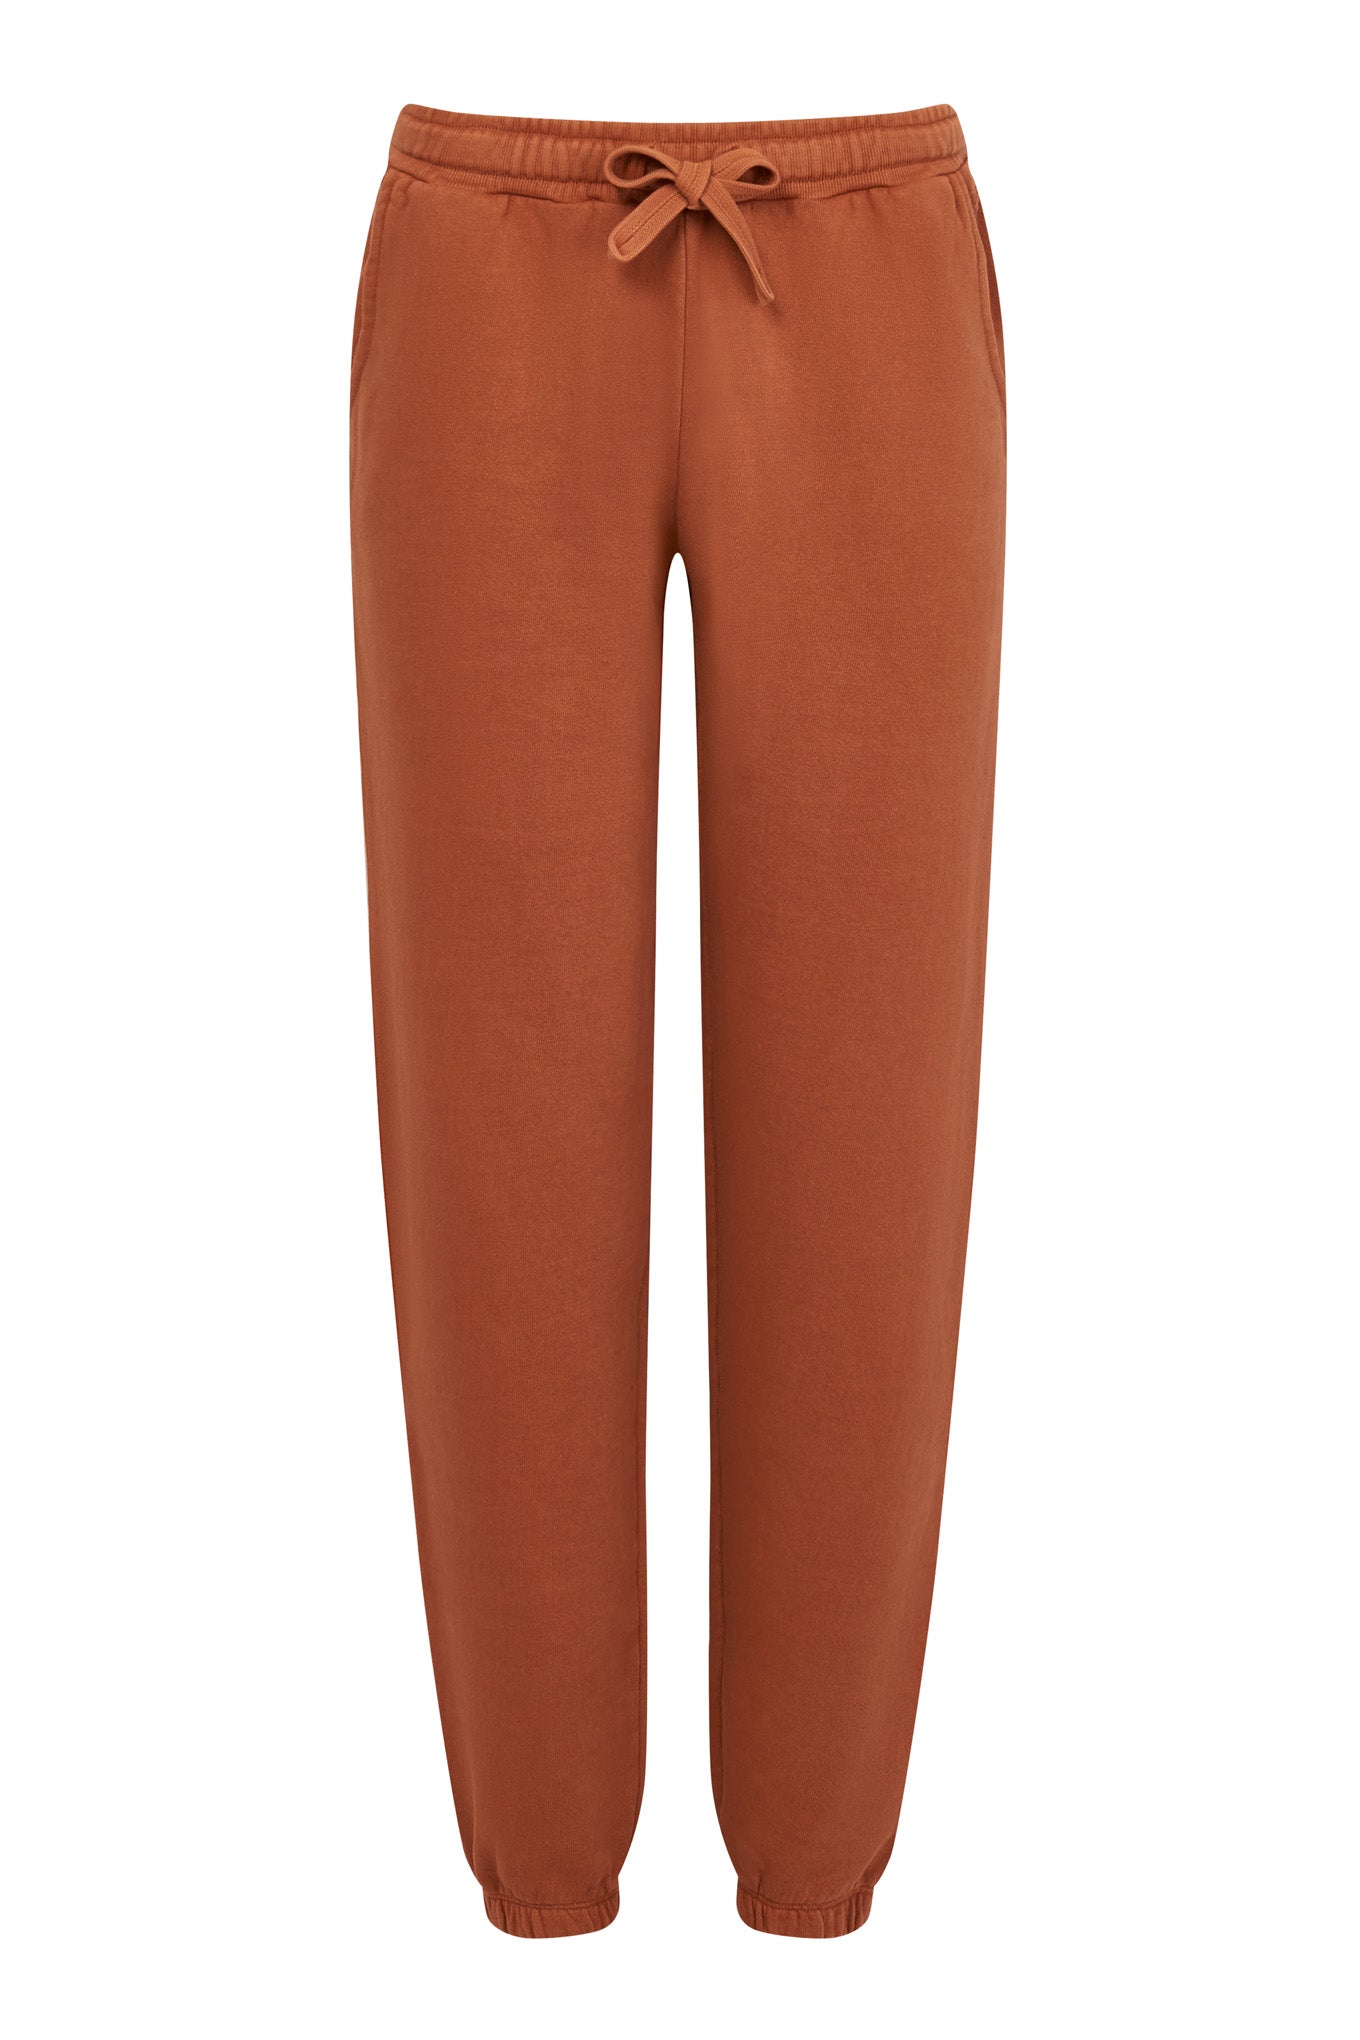 Dark orange EVIE jogging pants made of organic cotton from Komodo